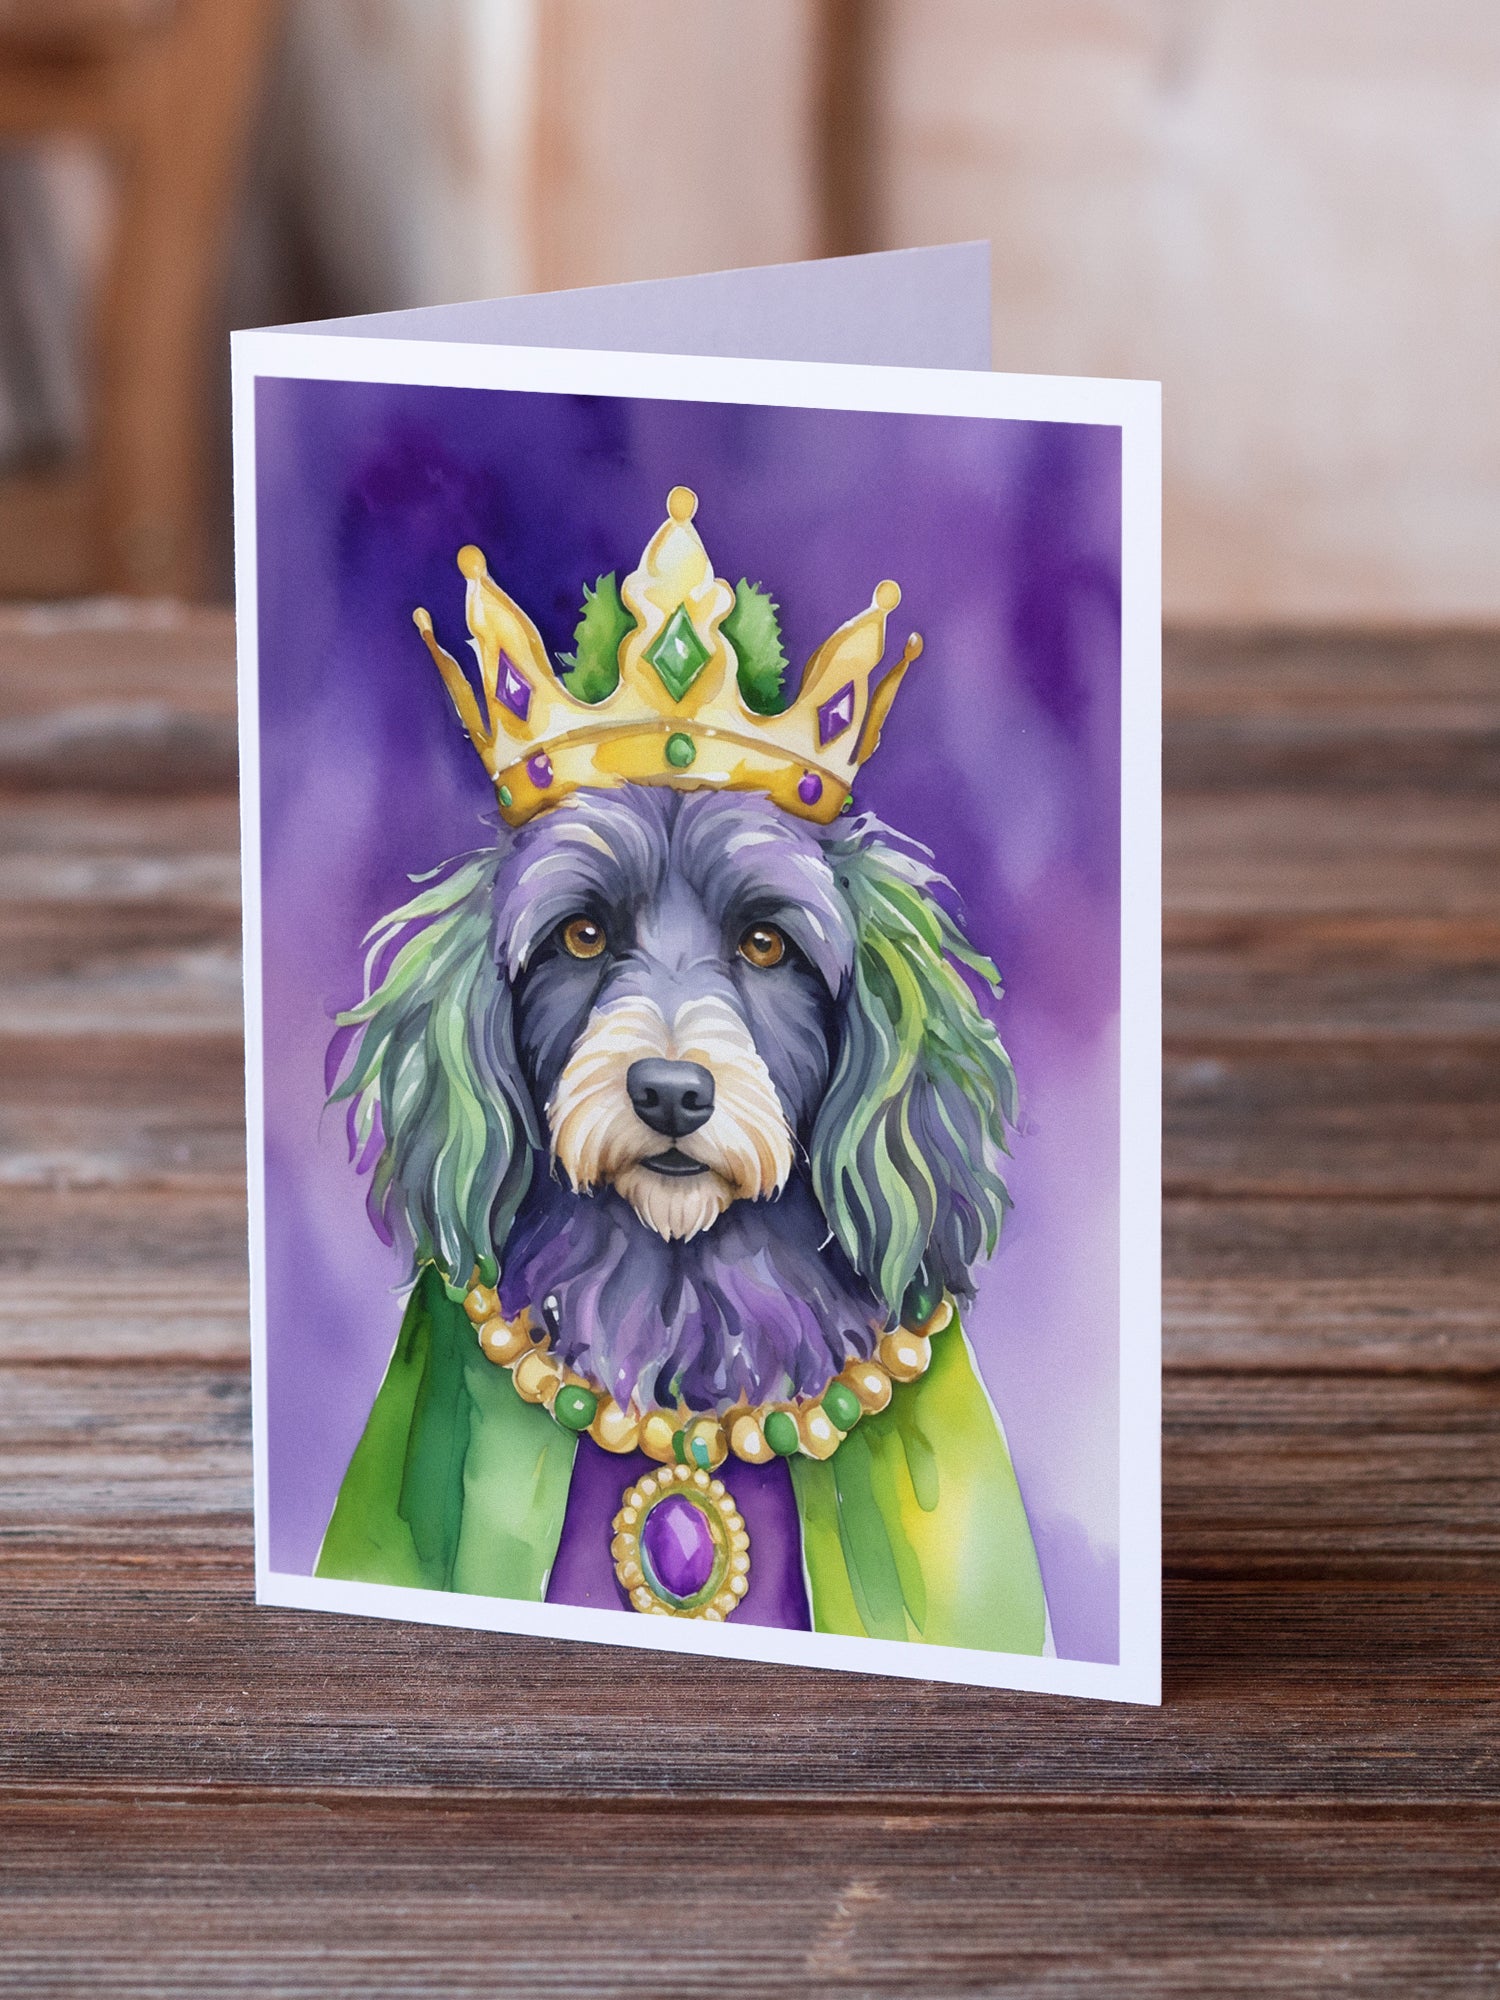 Buy this Bergamasco Sheepdog King of Mardi Gras Greeting Cards Pack of 8